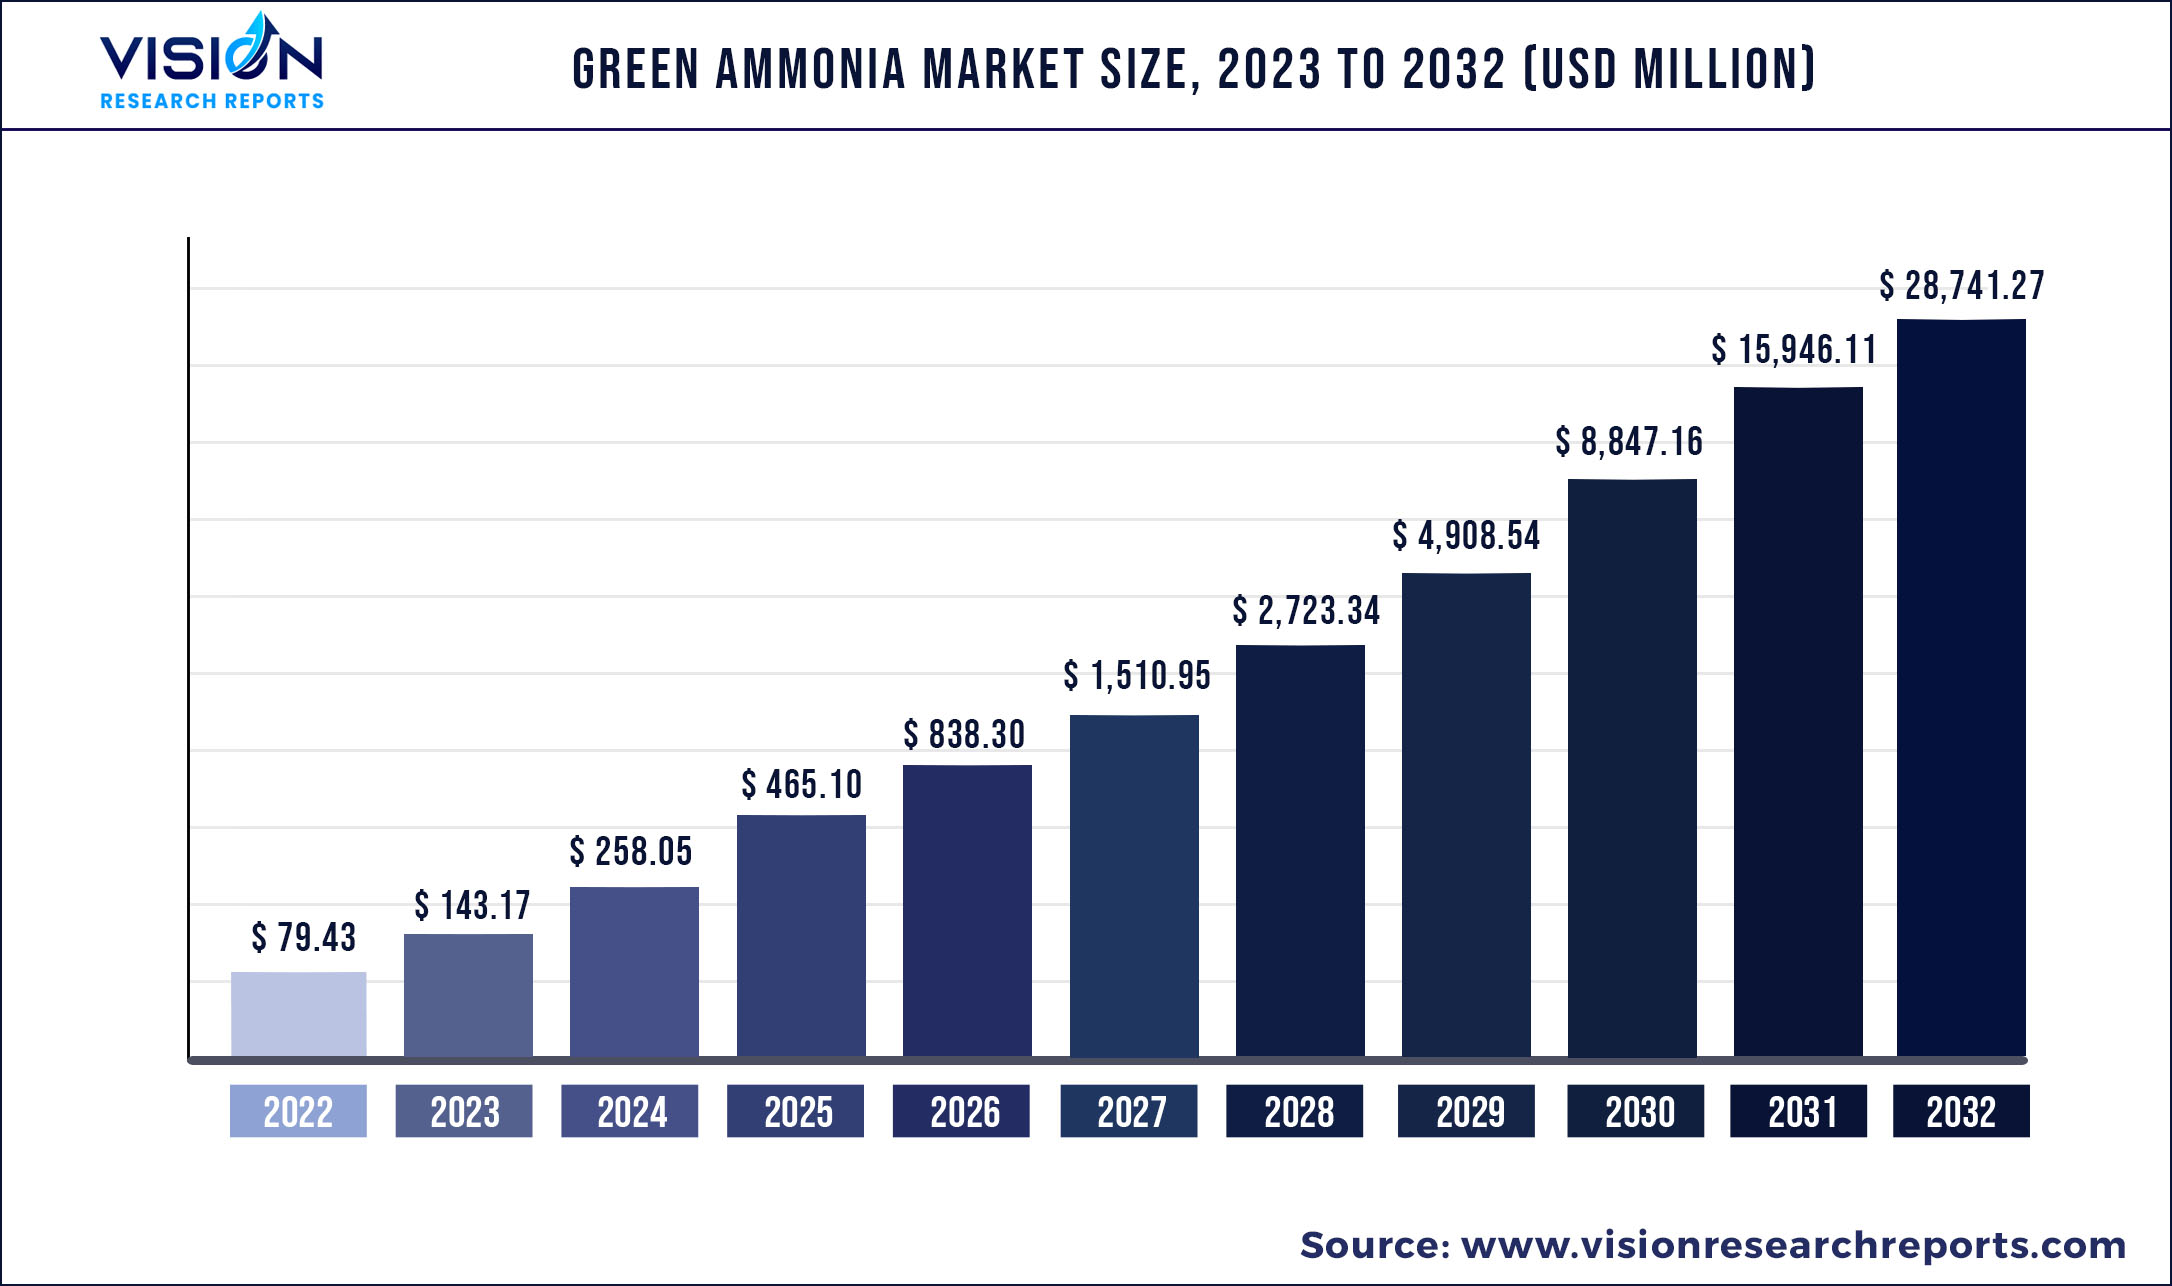 Green Ammonia Market Size 2023 to 2032